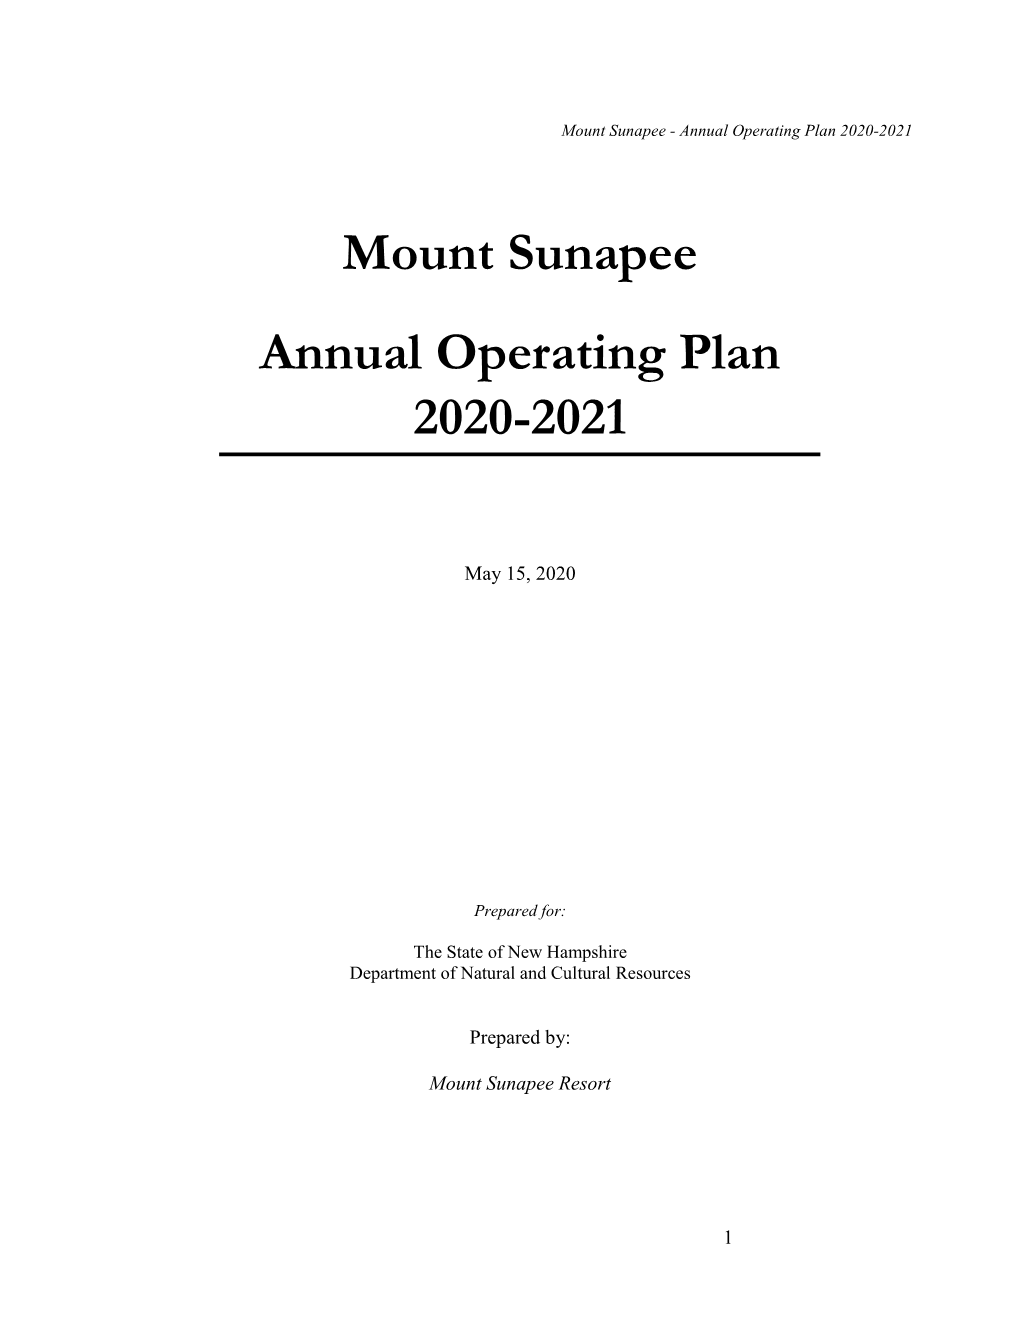 Mount Sunapee Annual Operating Plan 2020-2021